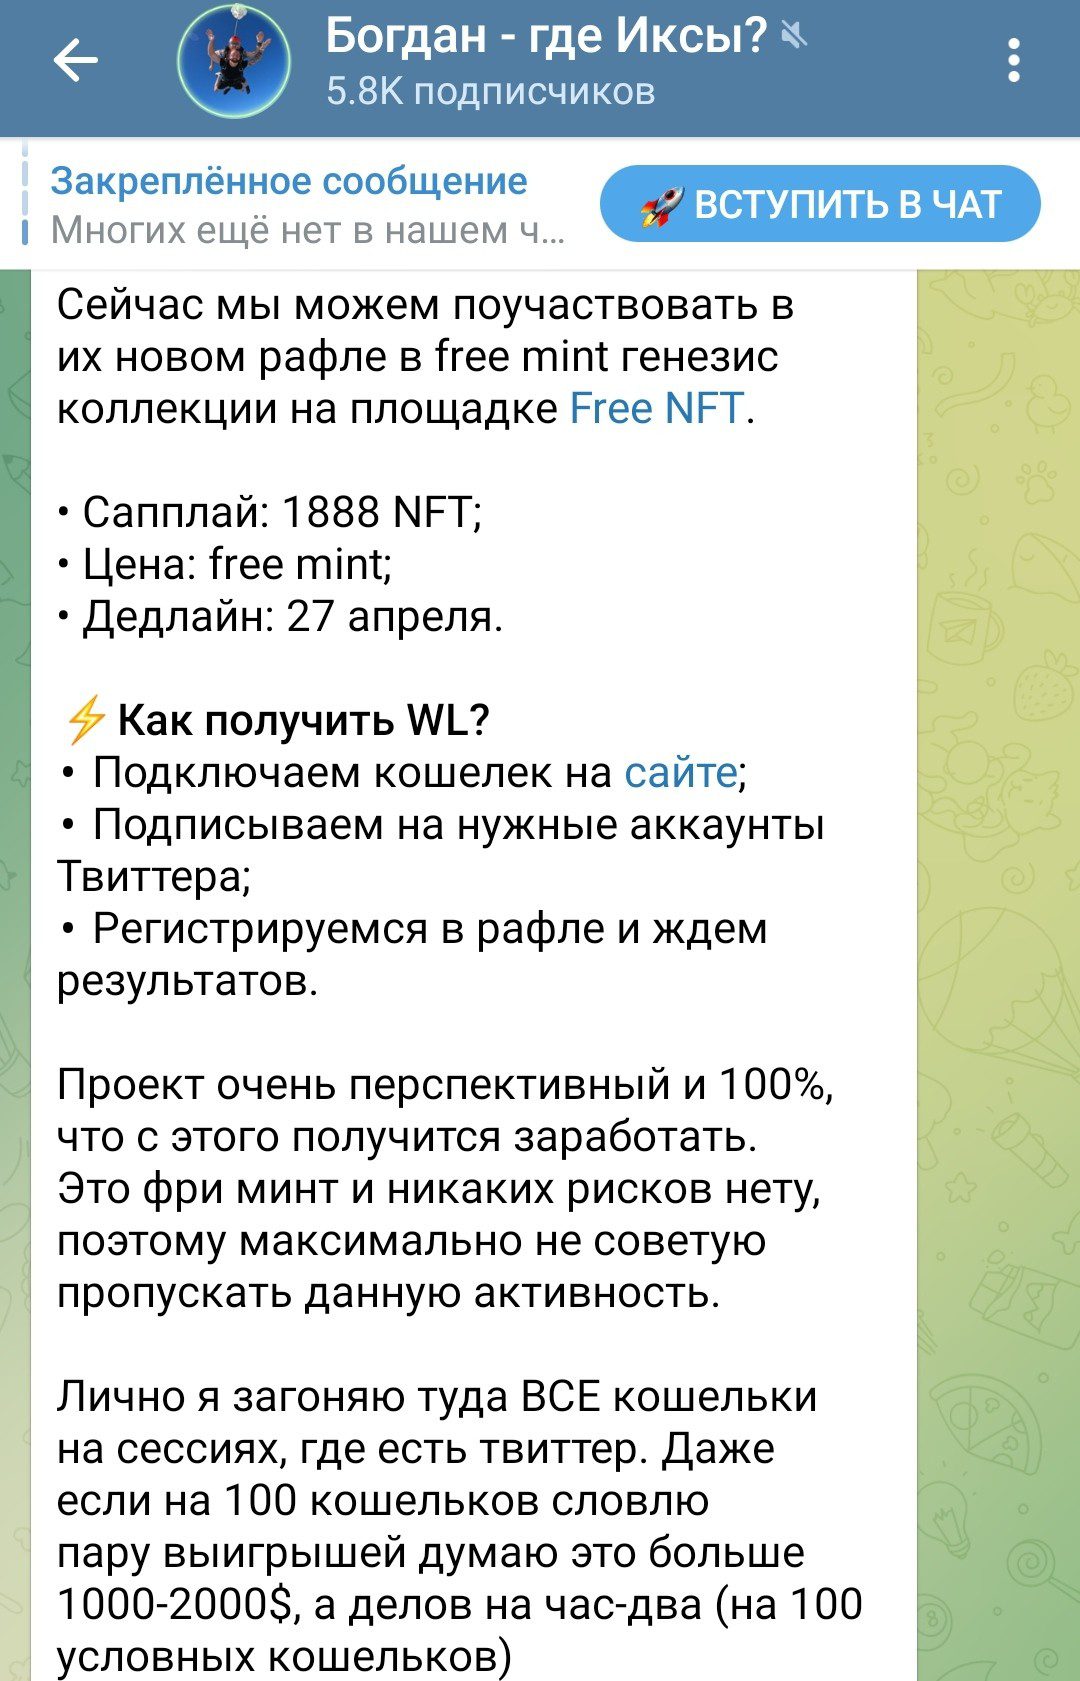 Телеграм Богдан Где Иксы обзор